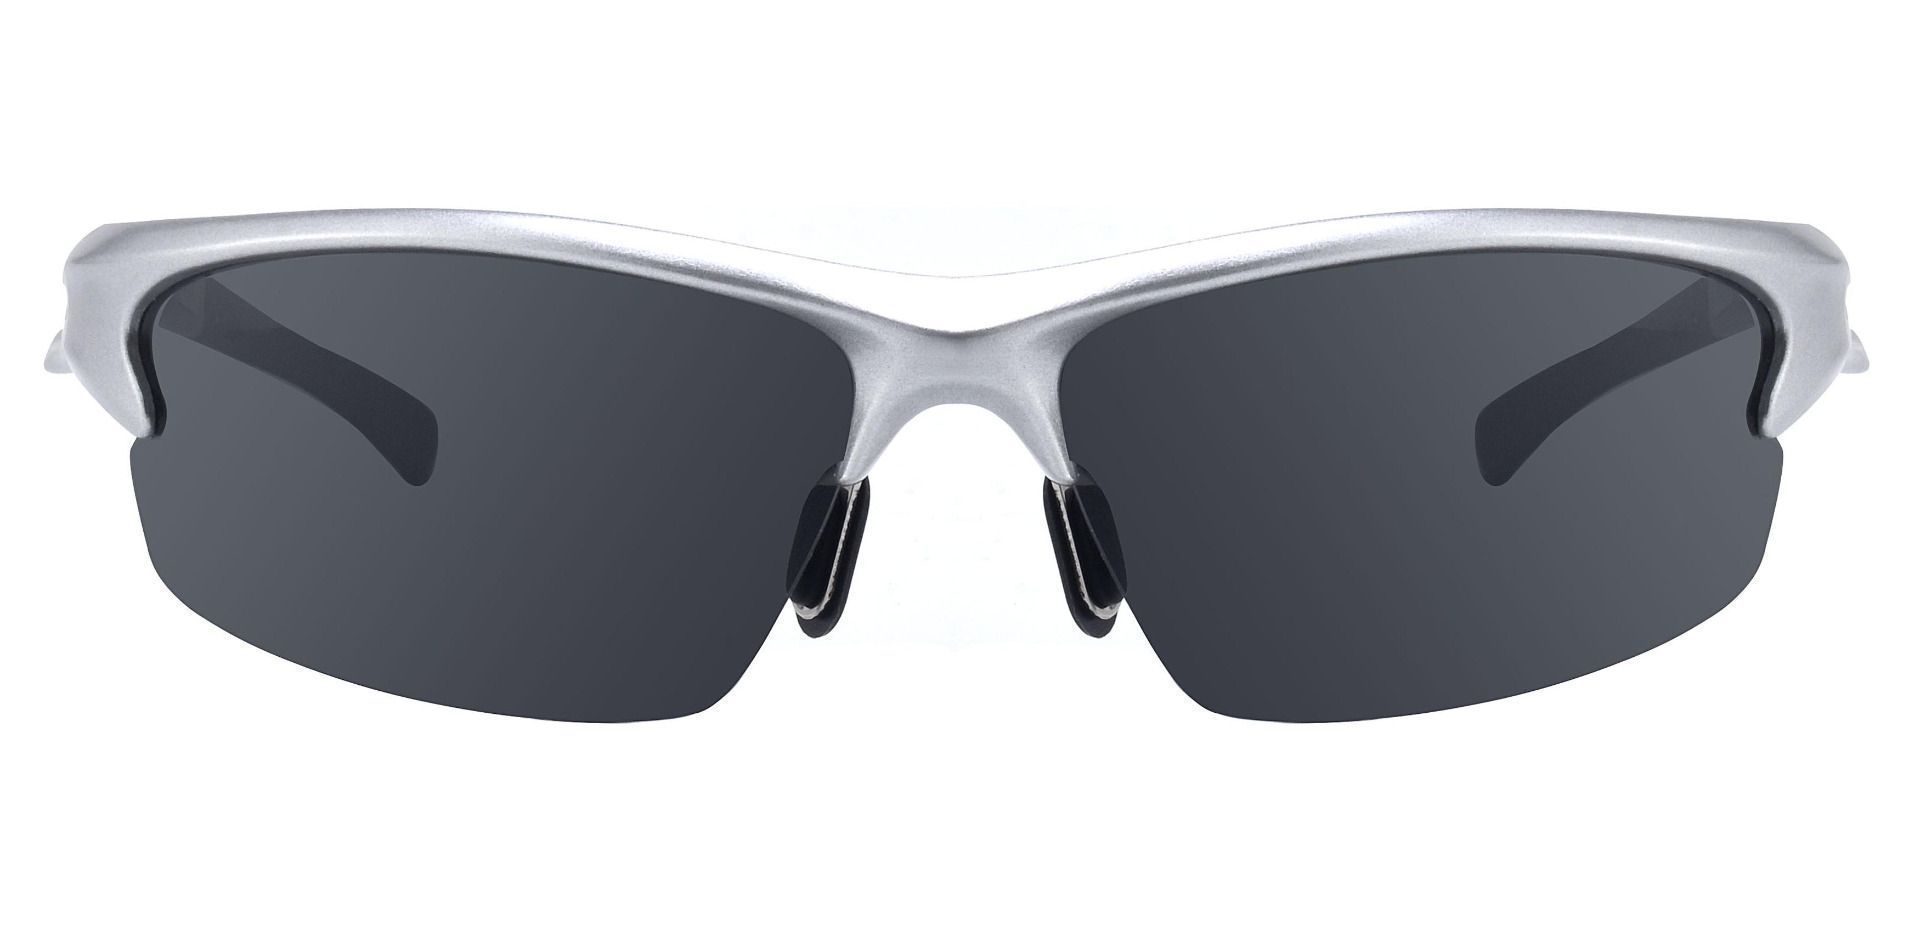 League Sports Glasses Non-Rx Sunglasses - Silver Frame With Gray Polarizer  Lenses